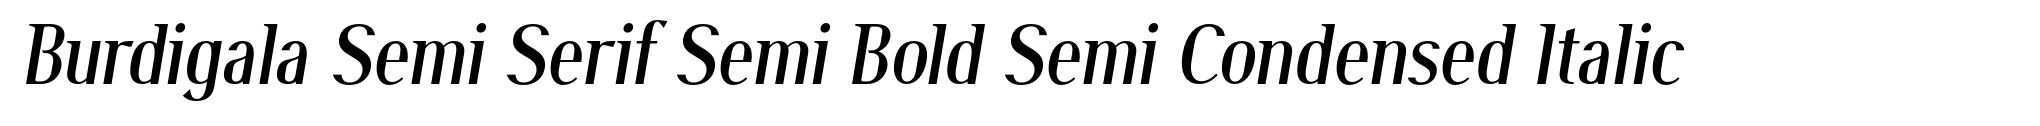 Burdigala Semi Serif Semi Bold Semi Condensed Italic image